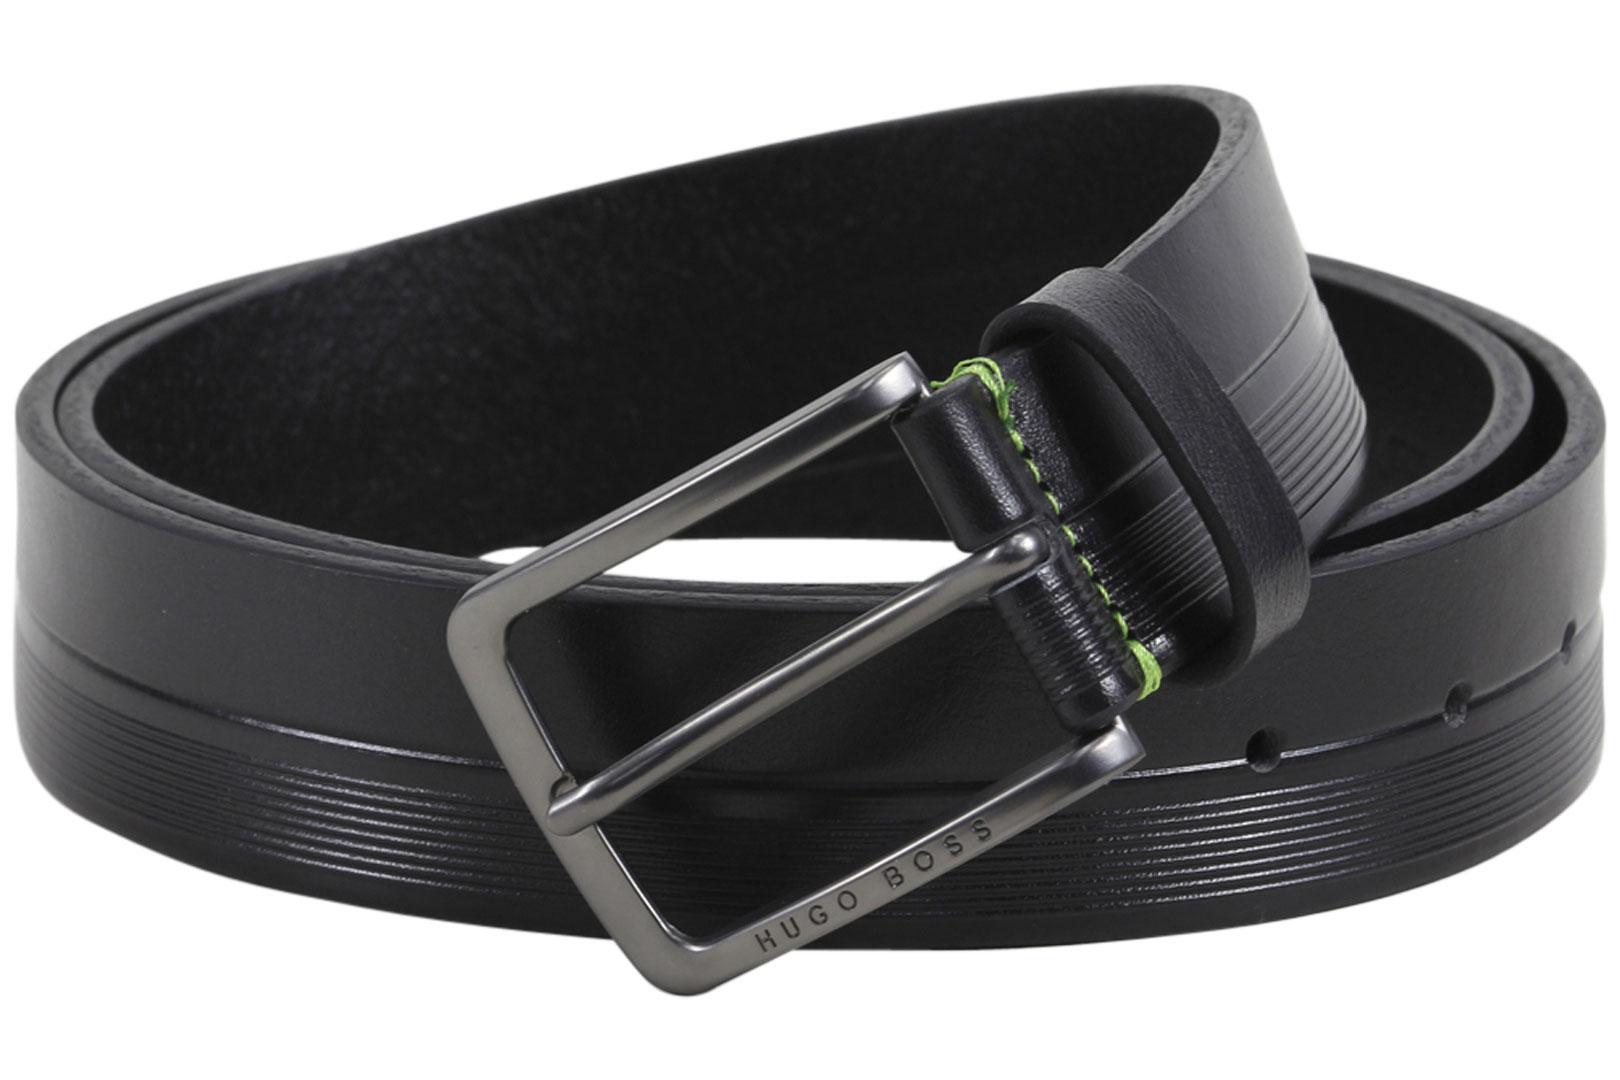 hugo boss leather belt sale